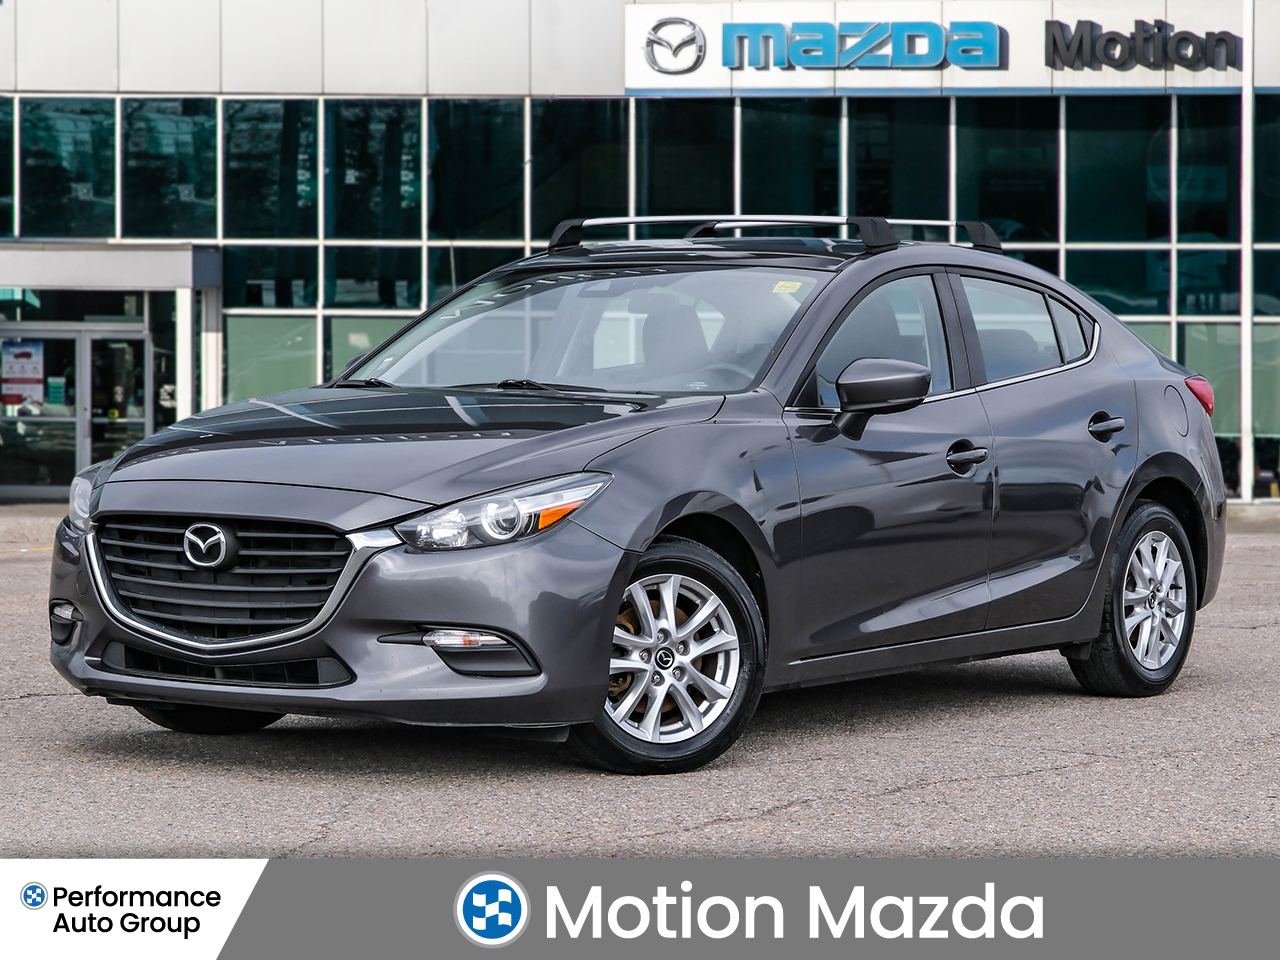 2018 Mazda Mazda3 GS * CLEAN CARFAX *LOW KM *MOONROOF